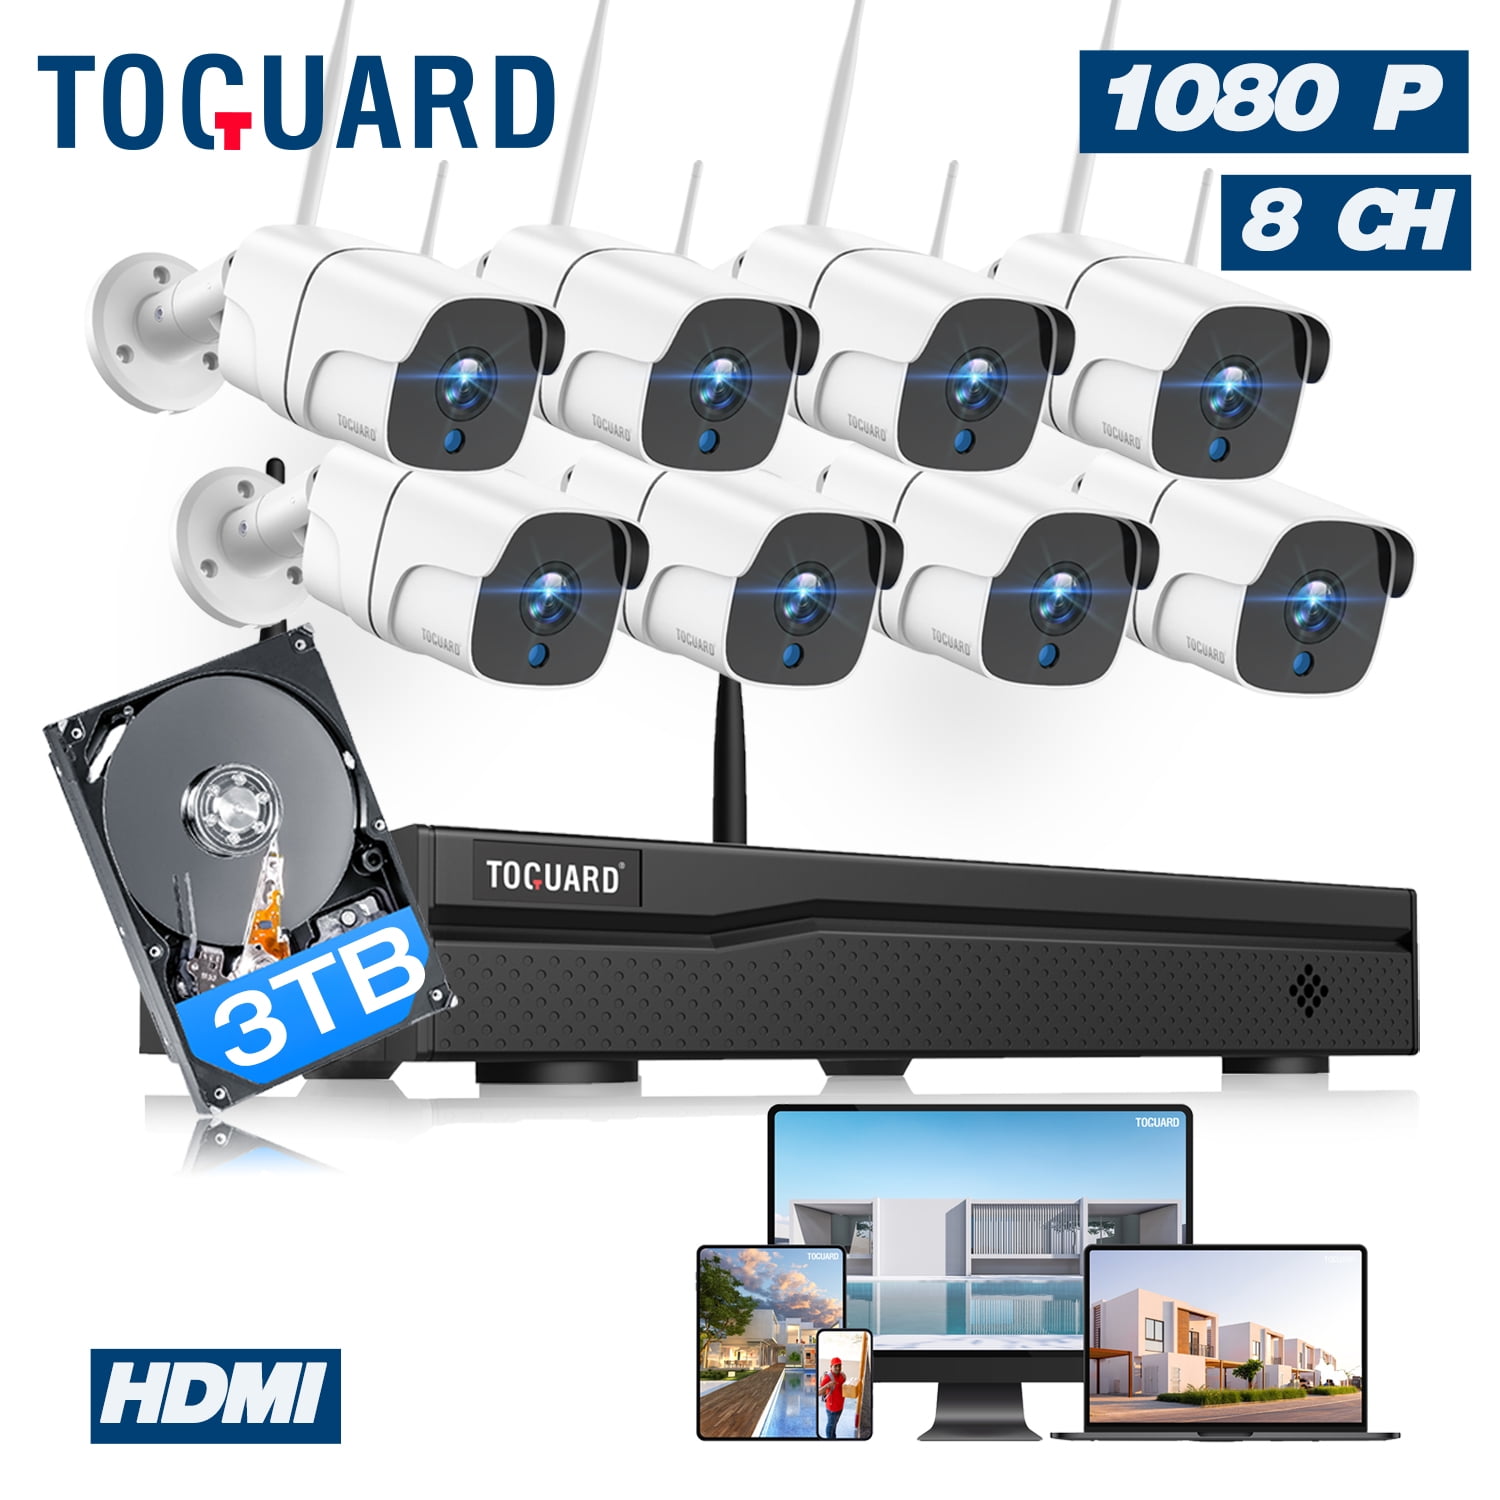 Buy Security Camera Online, Toguard W300 Security Camera